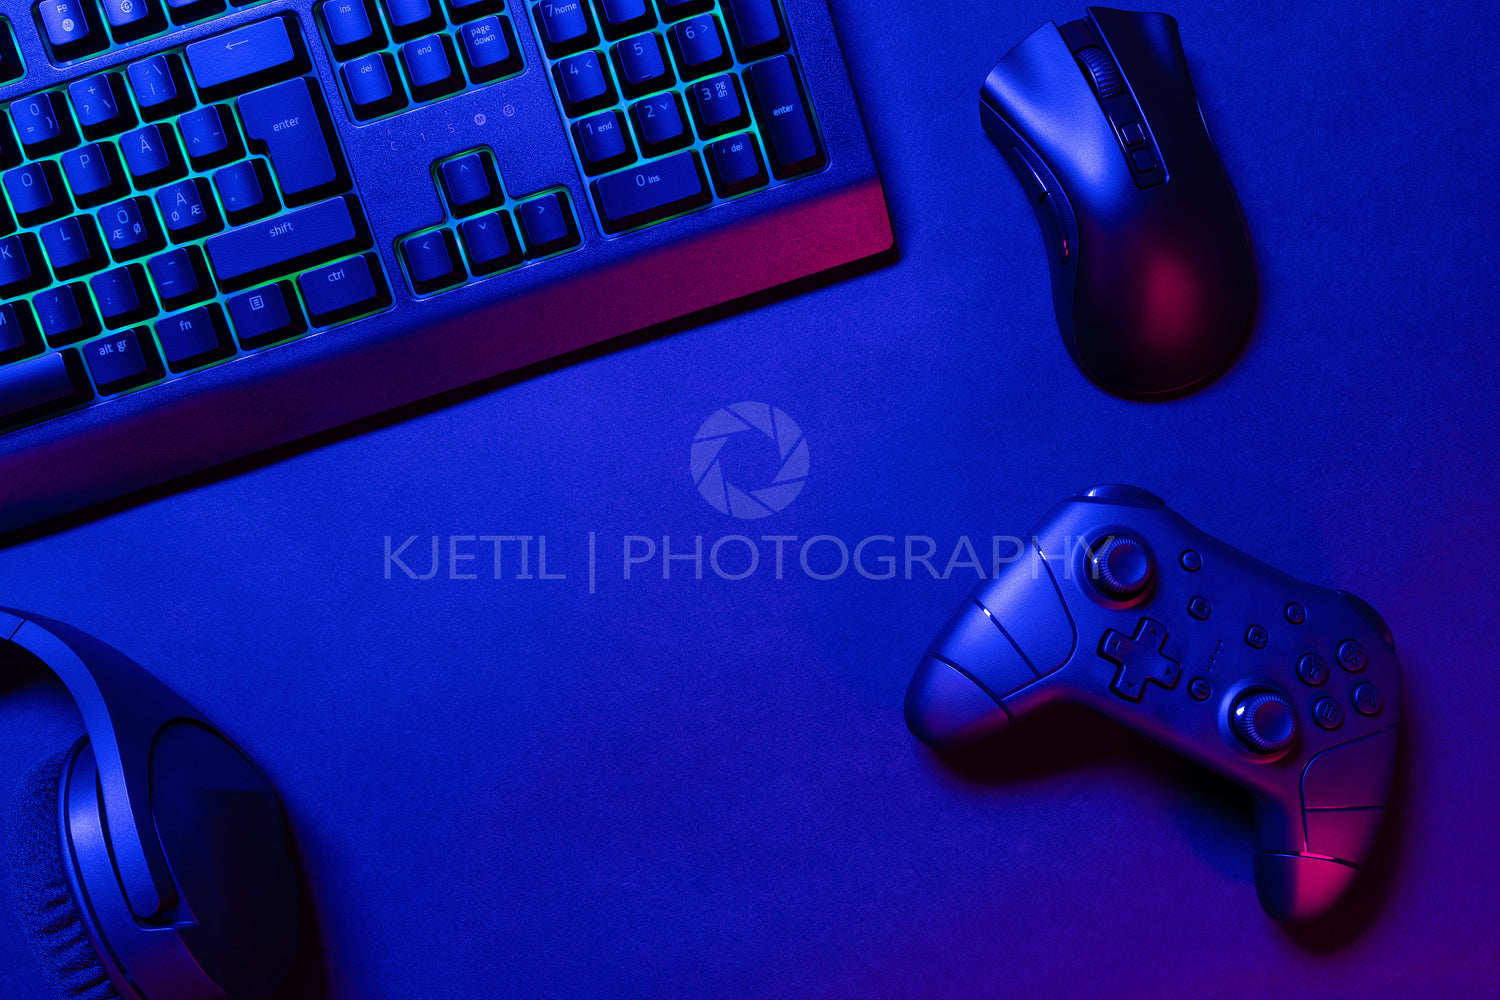 Green lit keyboard on blue lighted gaming gadgets on desk